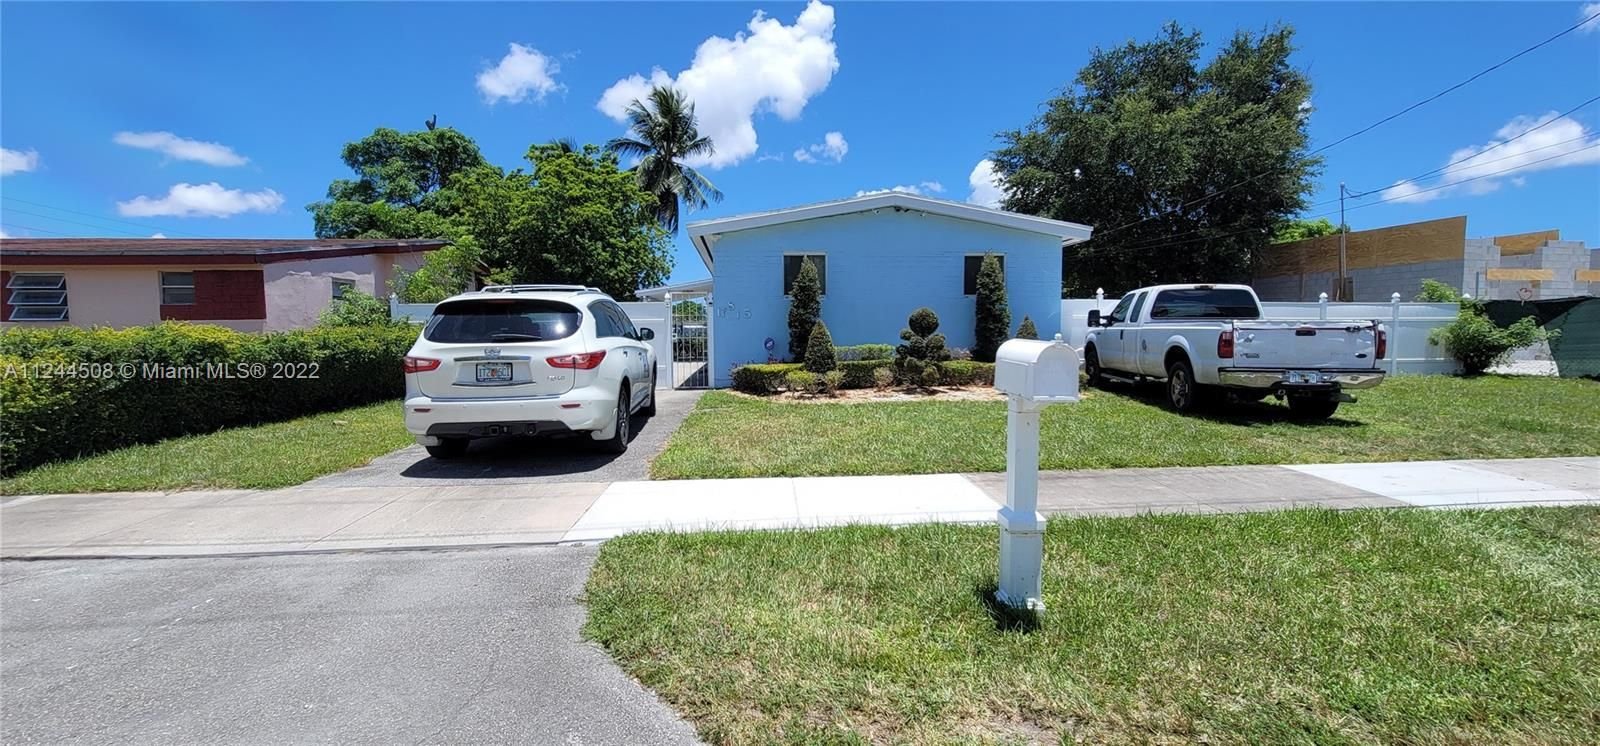 Real estate property located at 17815 29th Ct, Miami-Dade County, Miami Gardens, FL